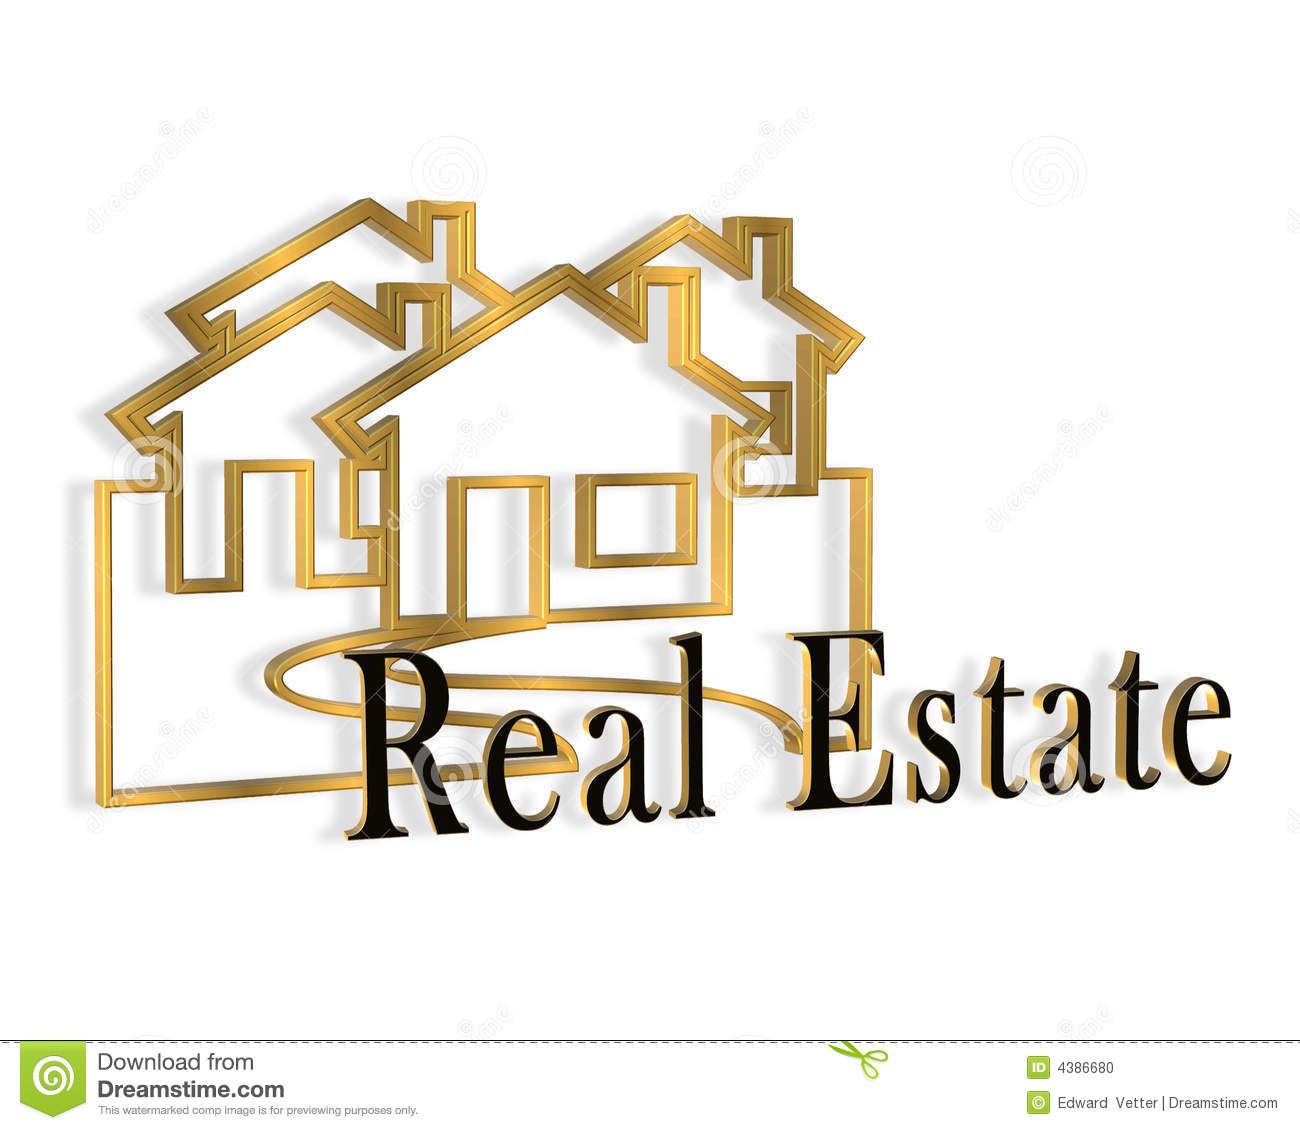 Real estate regulatory authority